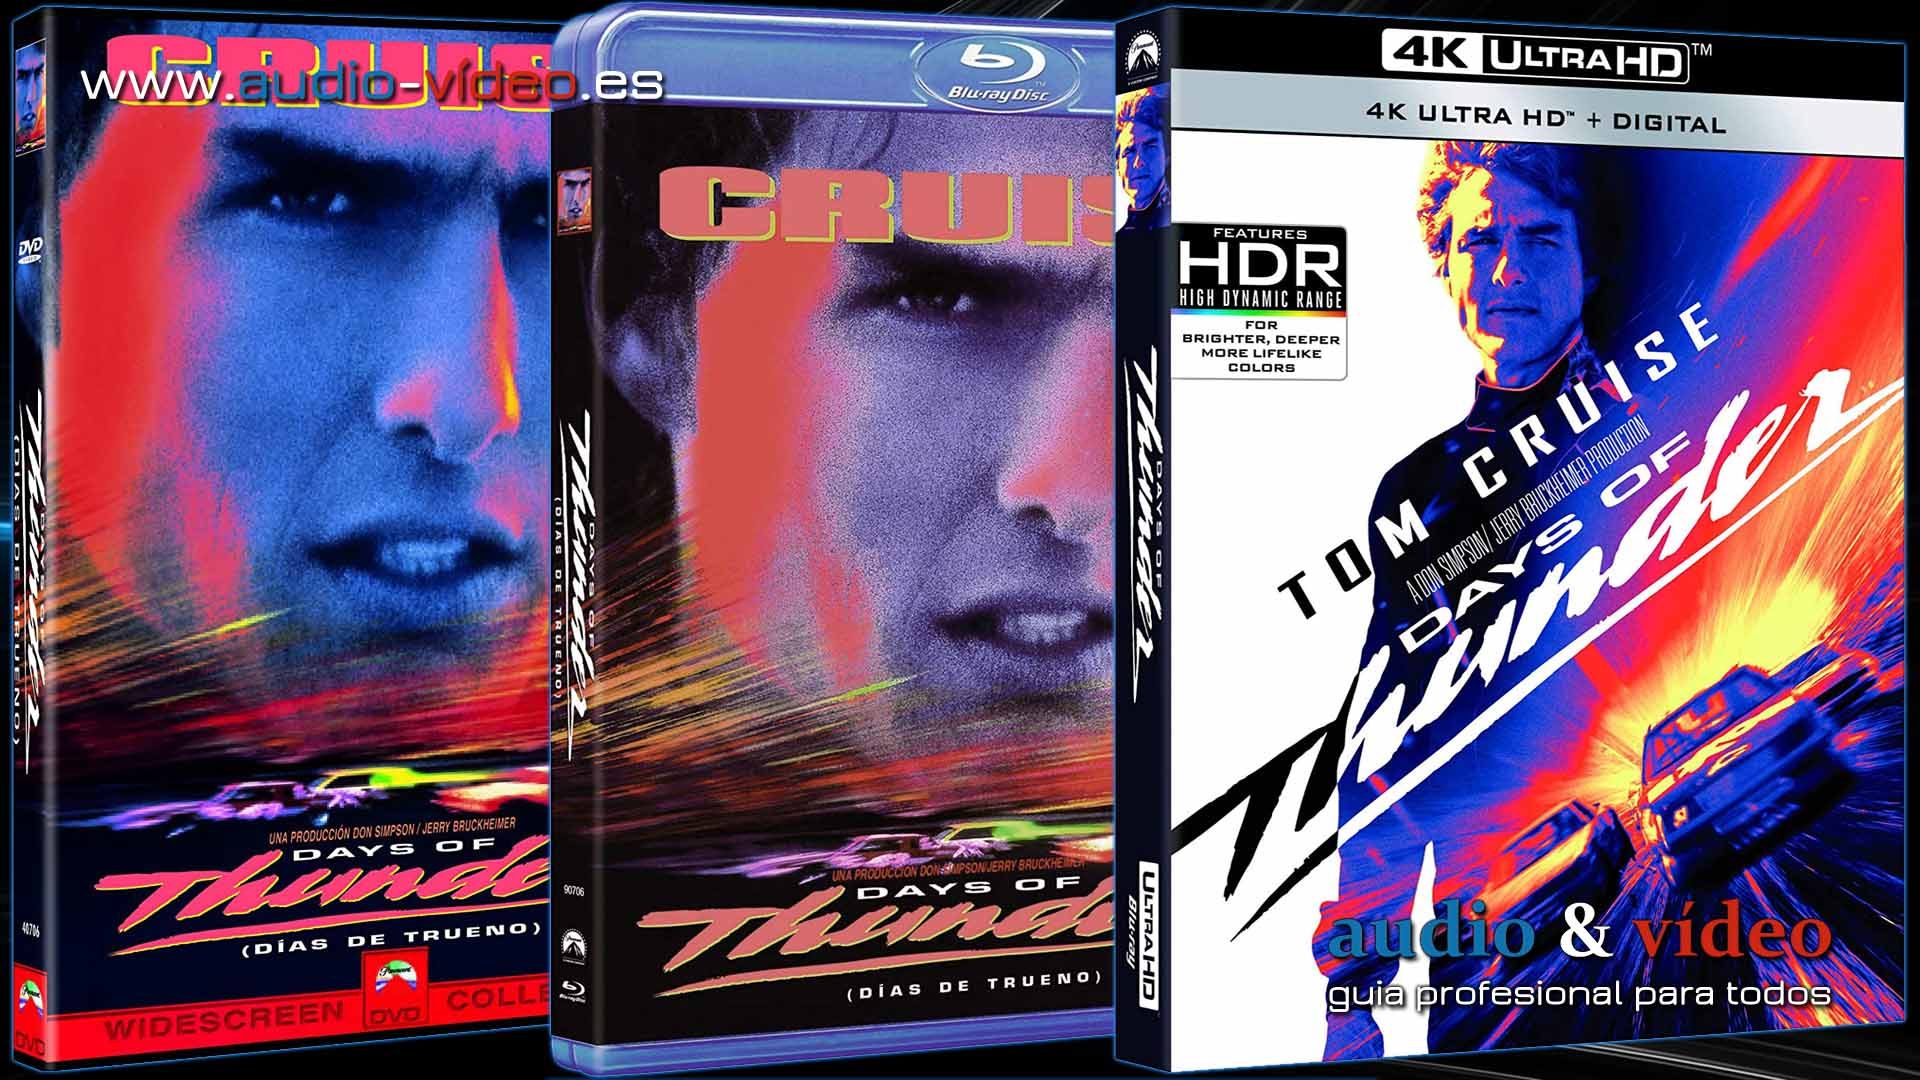 Días de trueno (Days of thunder) – 4K UHD, BluRay, DVD + soundtrack completo